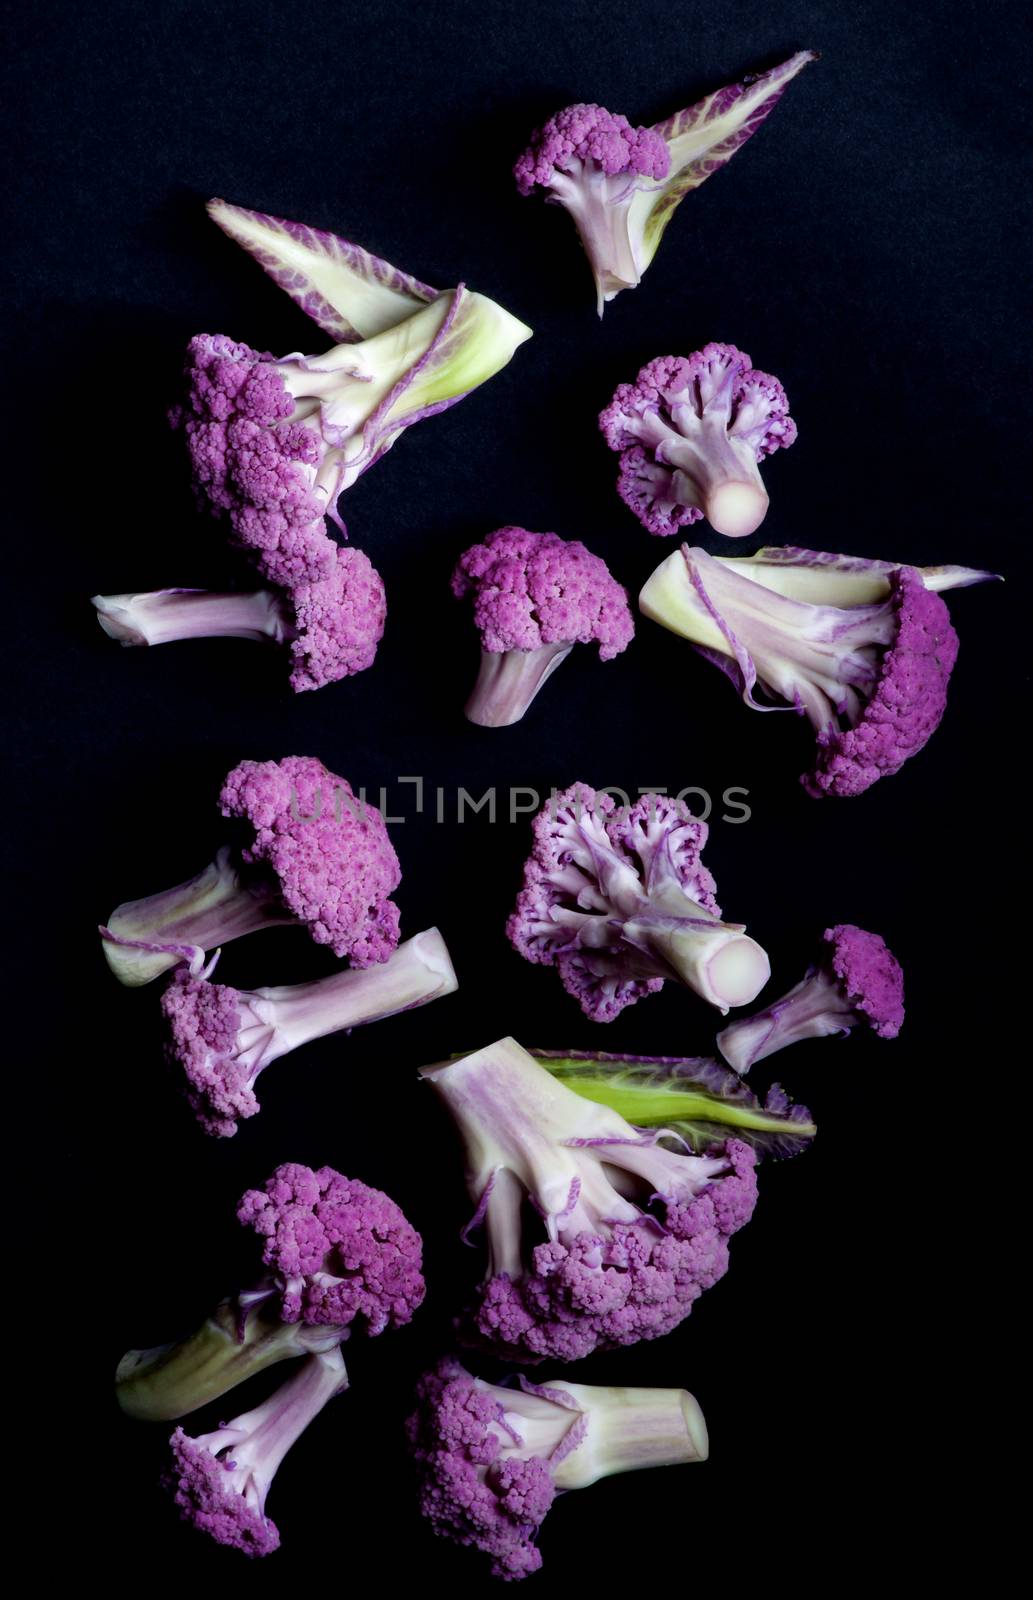 Fresh Purple Cauliflower by zhekos